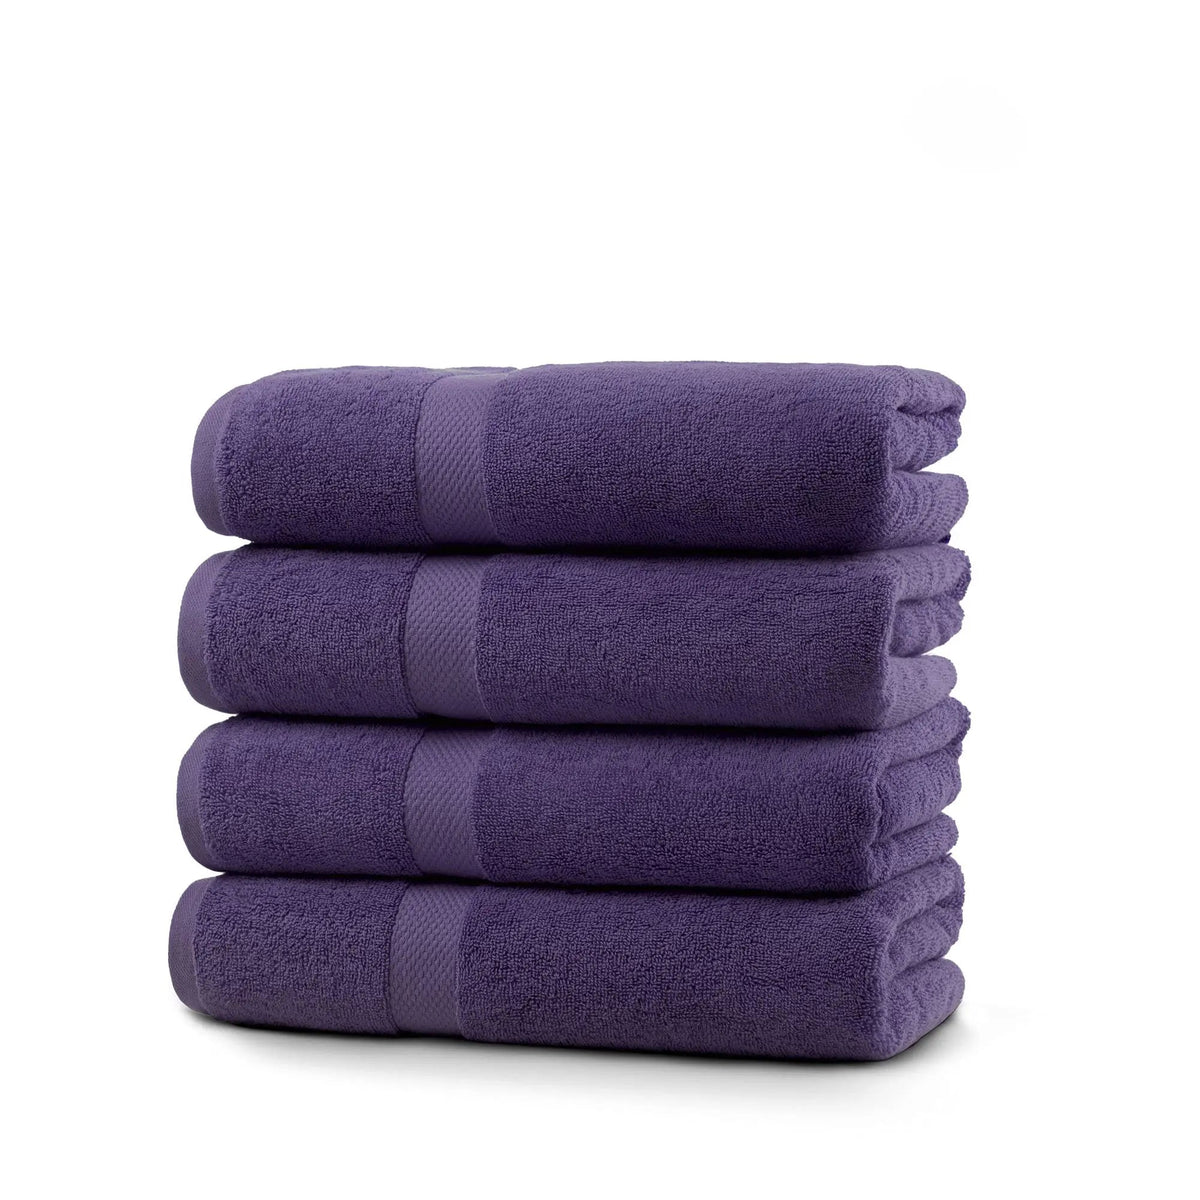 Misty Calm Organic Cotton Bath Towel | Hypoallergenic - Allergy Friendly - Naturally Free